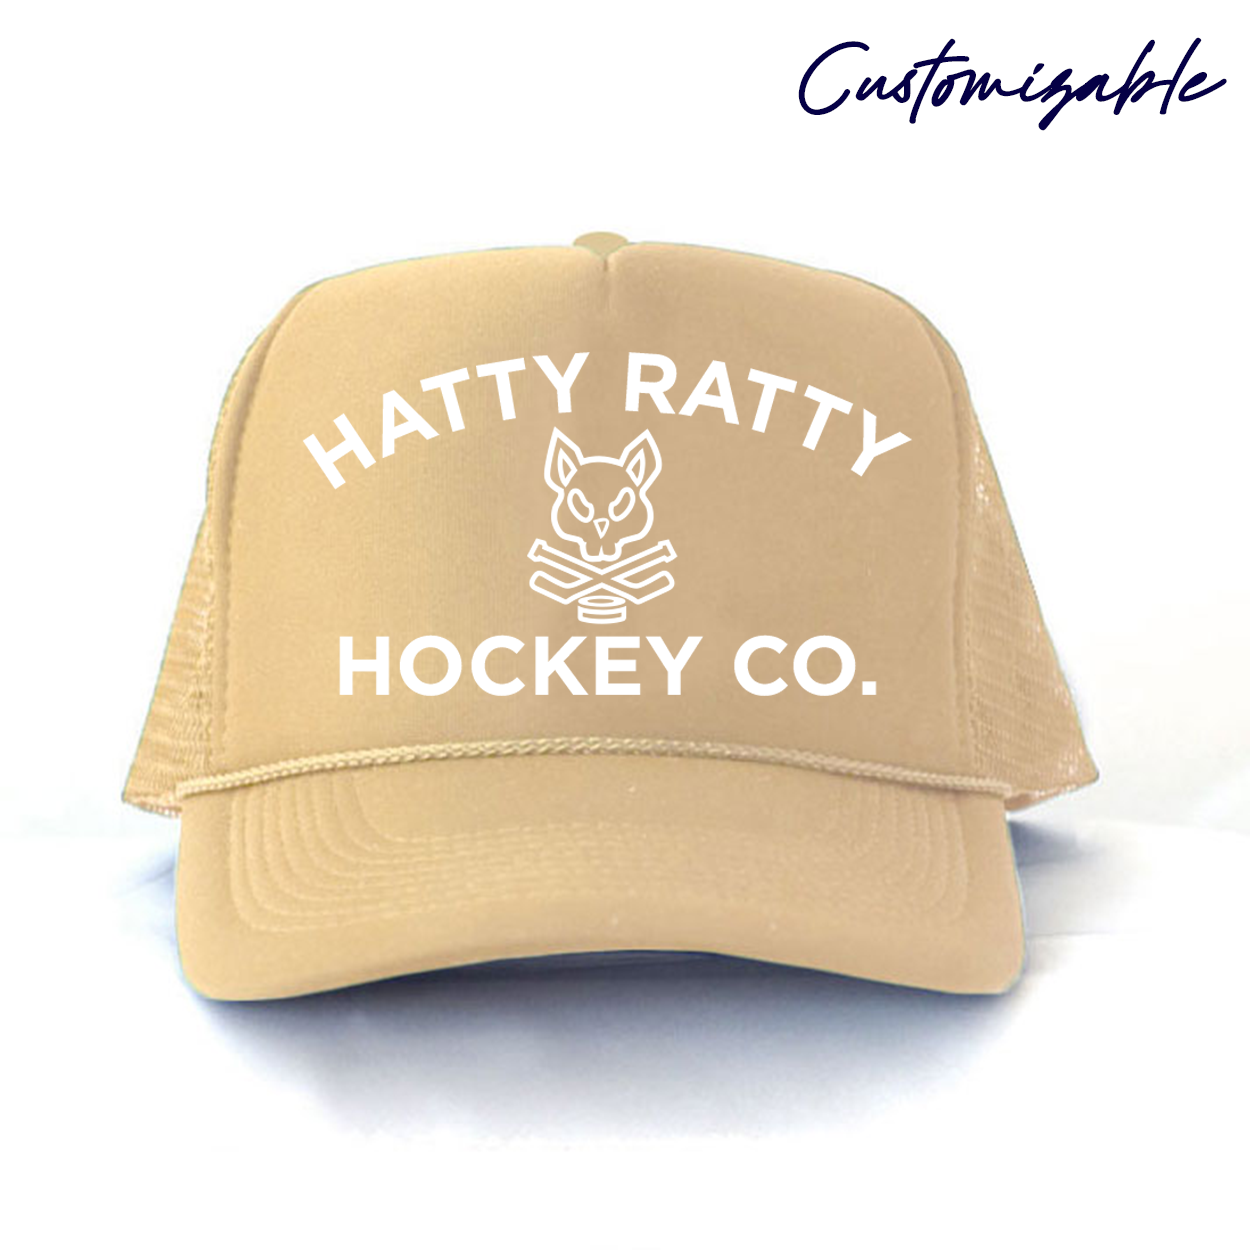 Hatty Ratty Customized hat